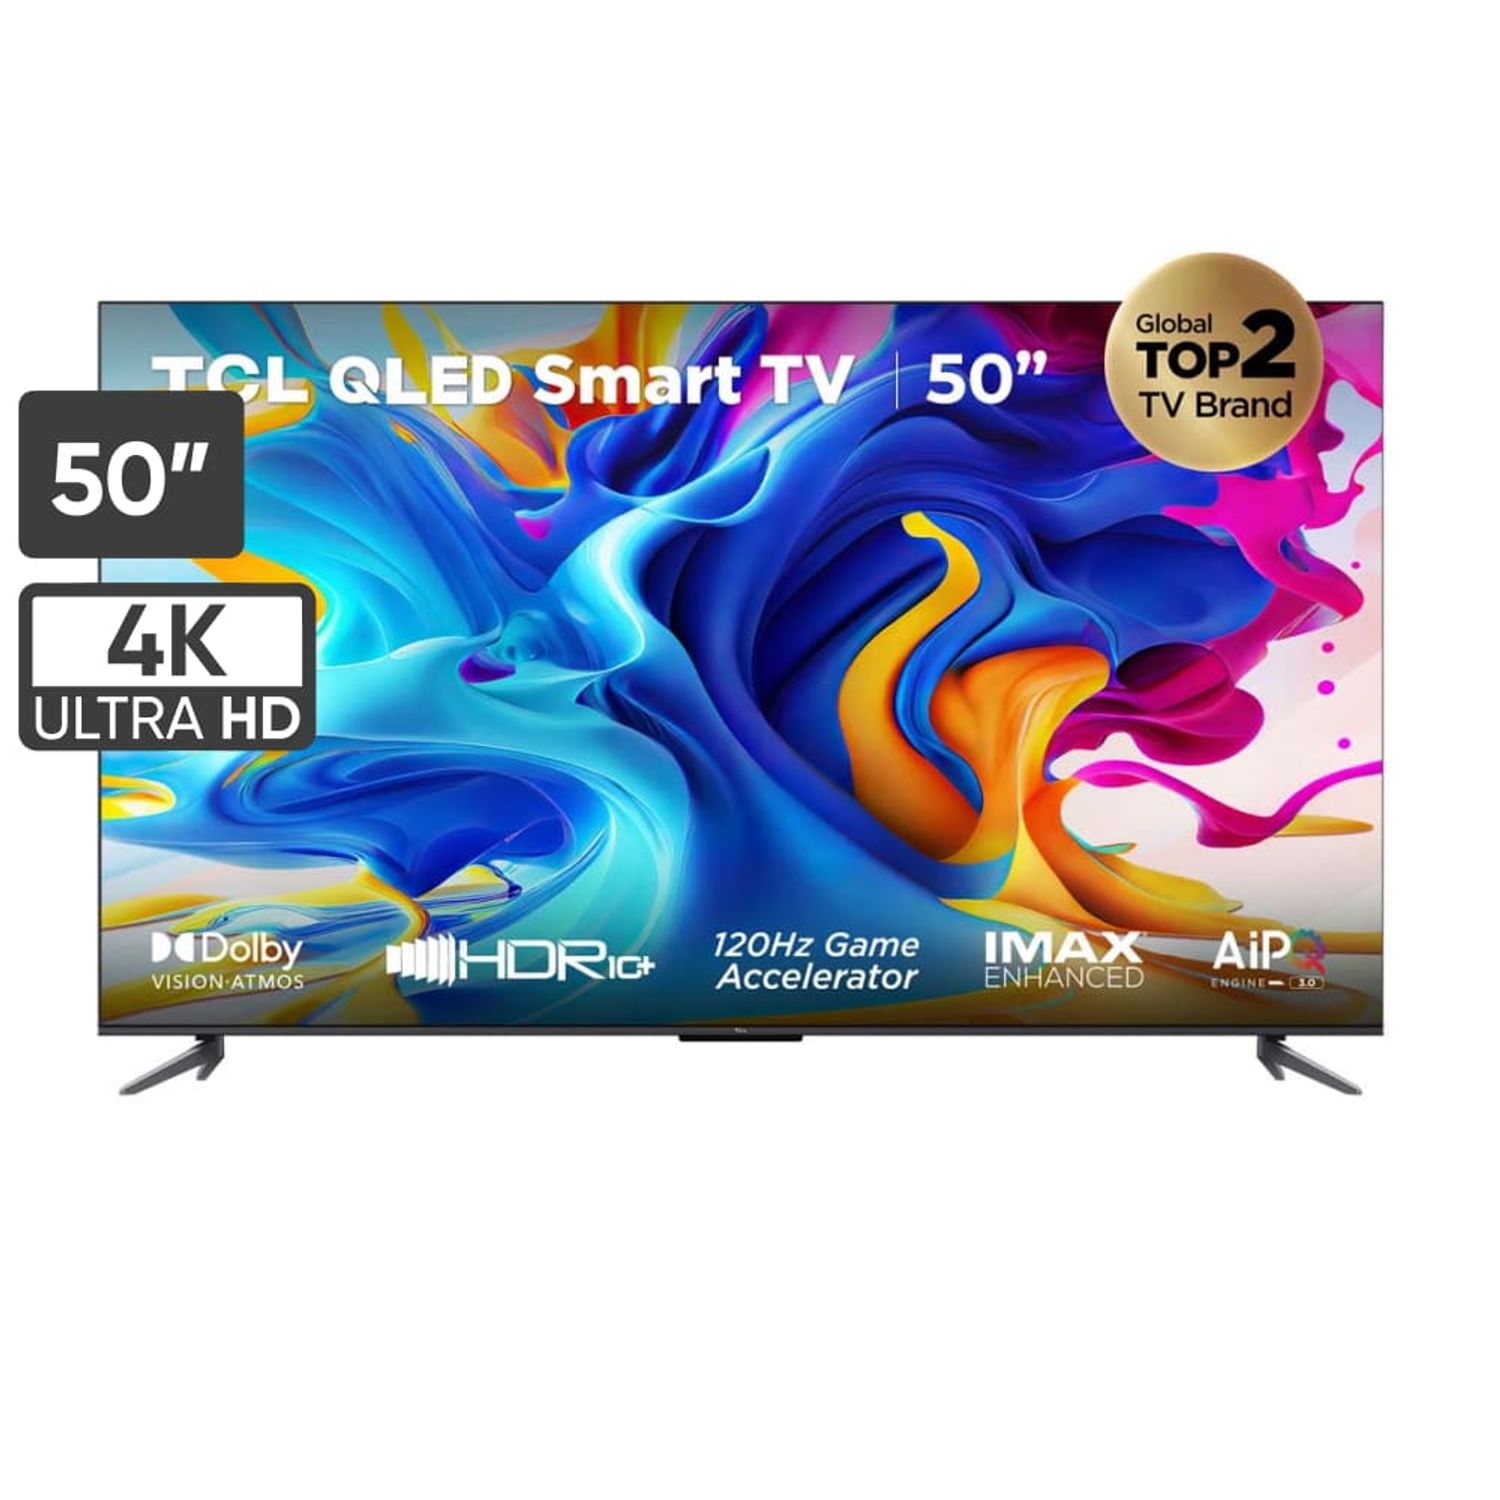 TV QLED 50  TCL 50C645, UHD 4K, Quad Core, Smart TV, Dolby Atmos